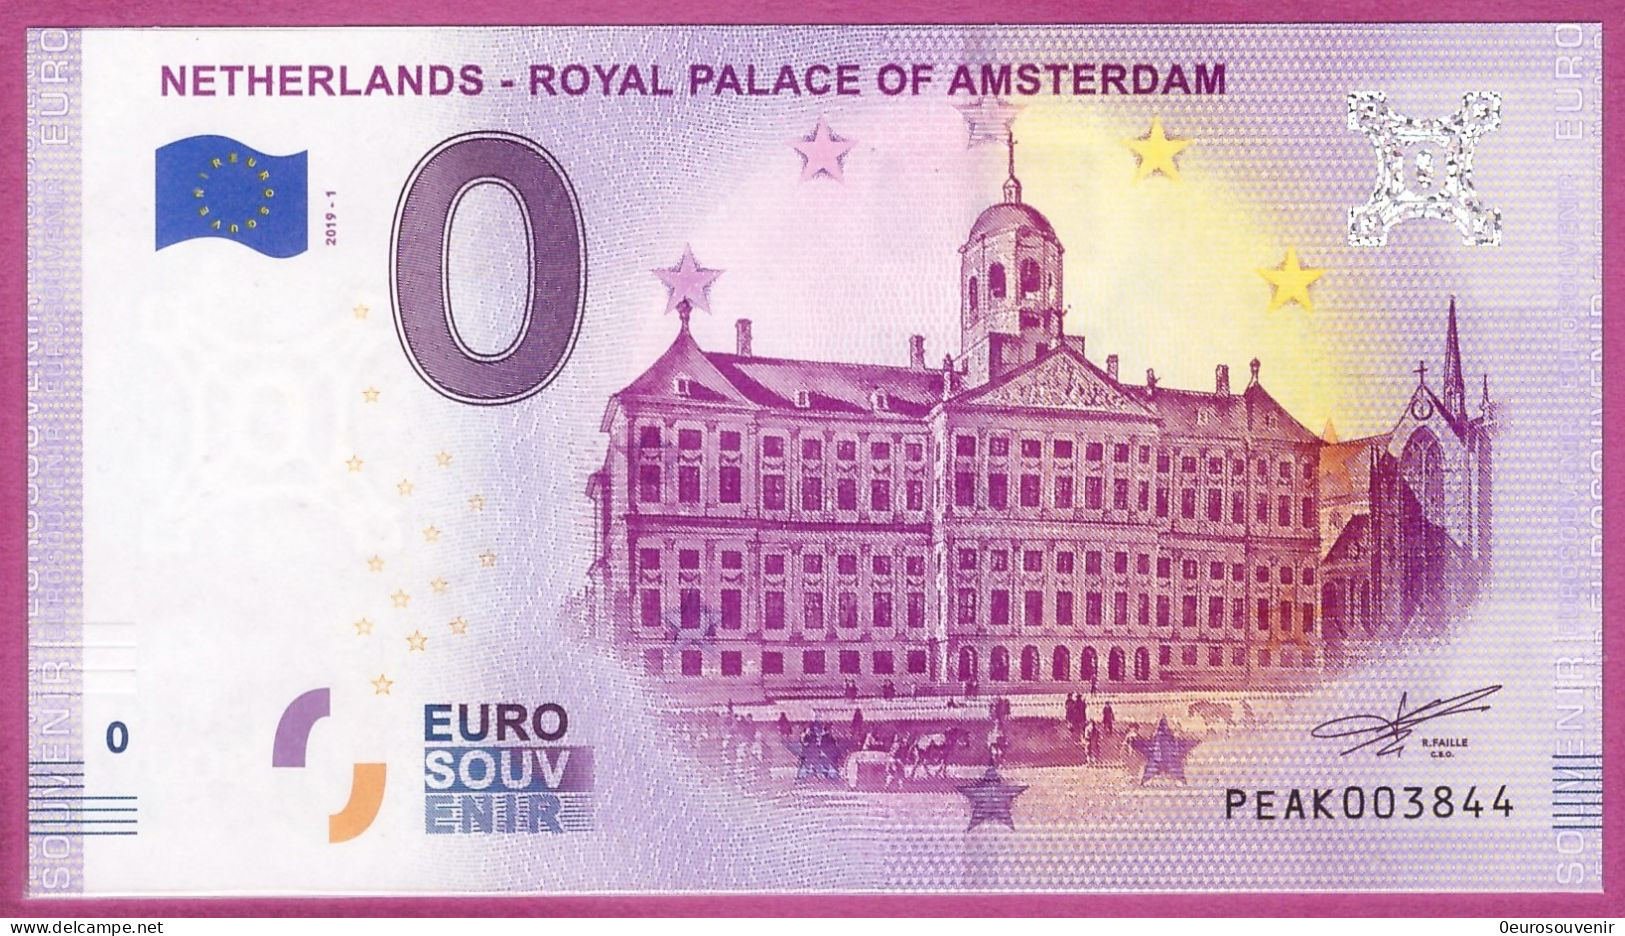 0-Euro PEAK 2019-1  NETHERLANDS - ROYAL PALACE OF AMSTERDAM - Prove Private